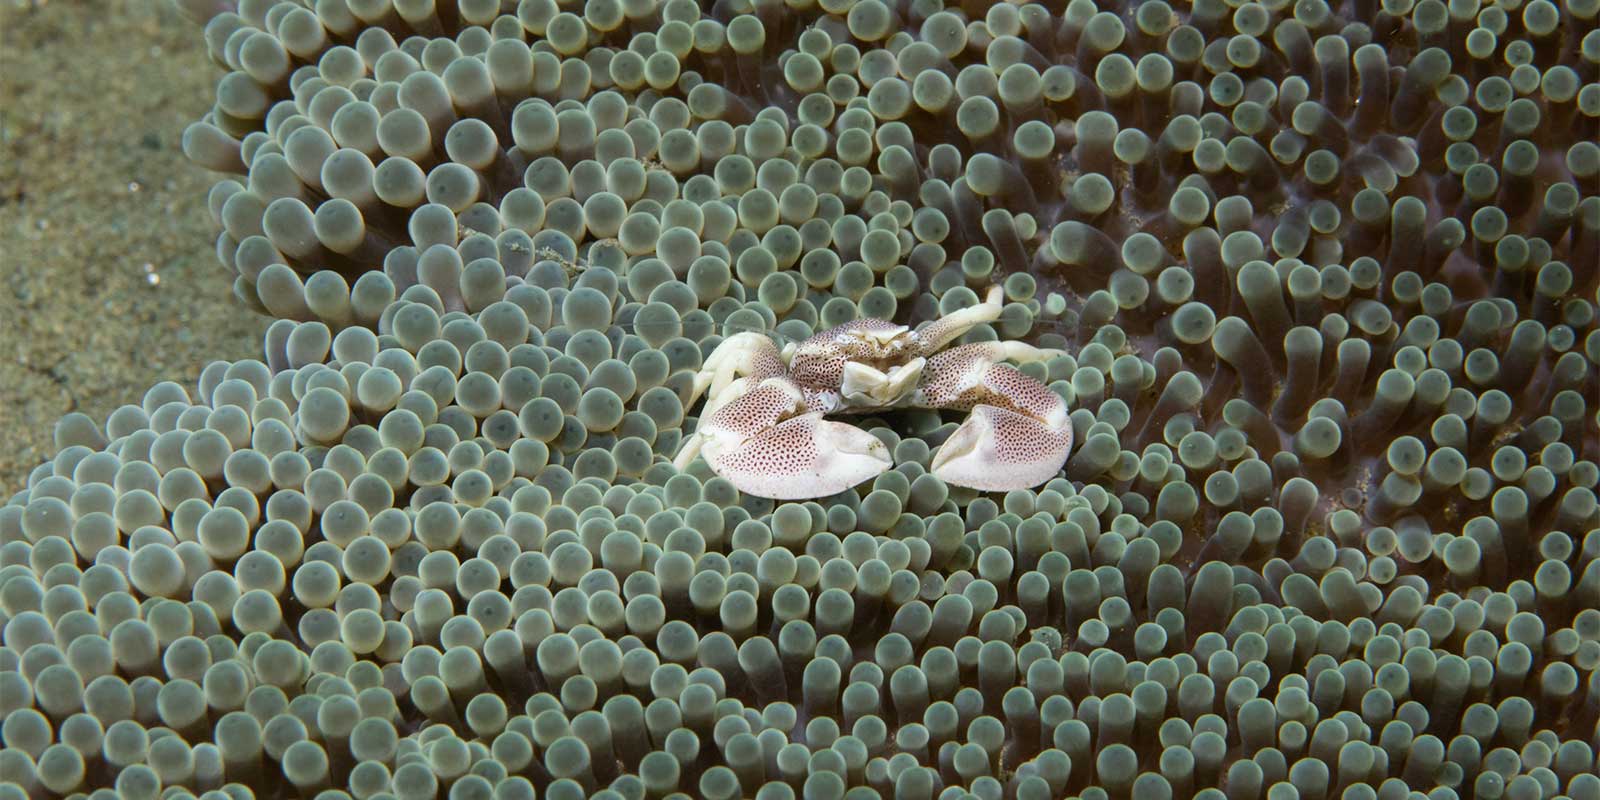 Porcelain crab in Ambon, Indonesia